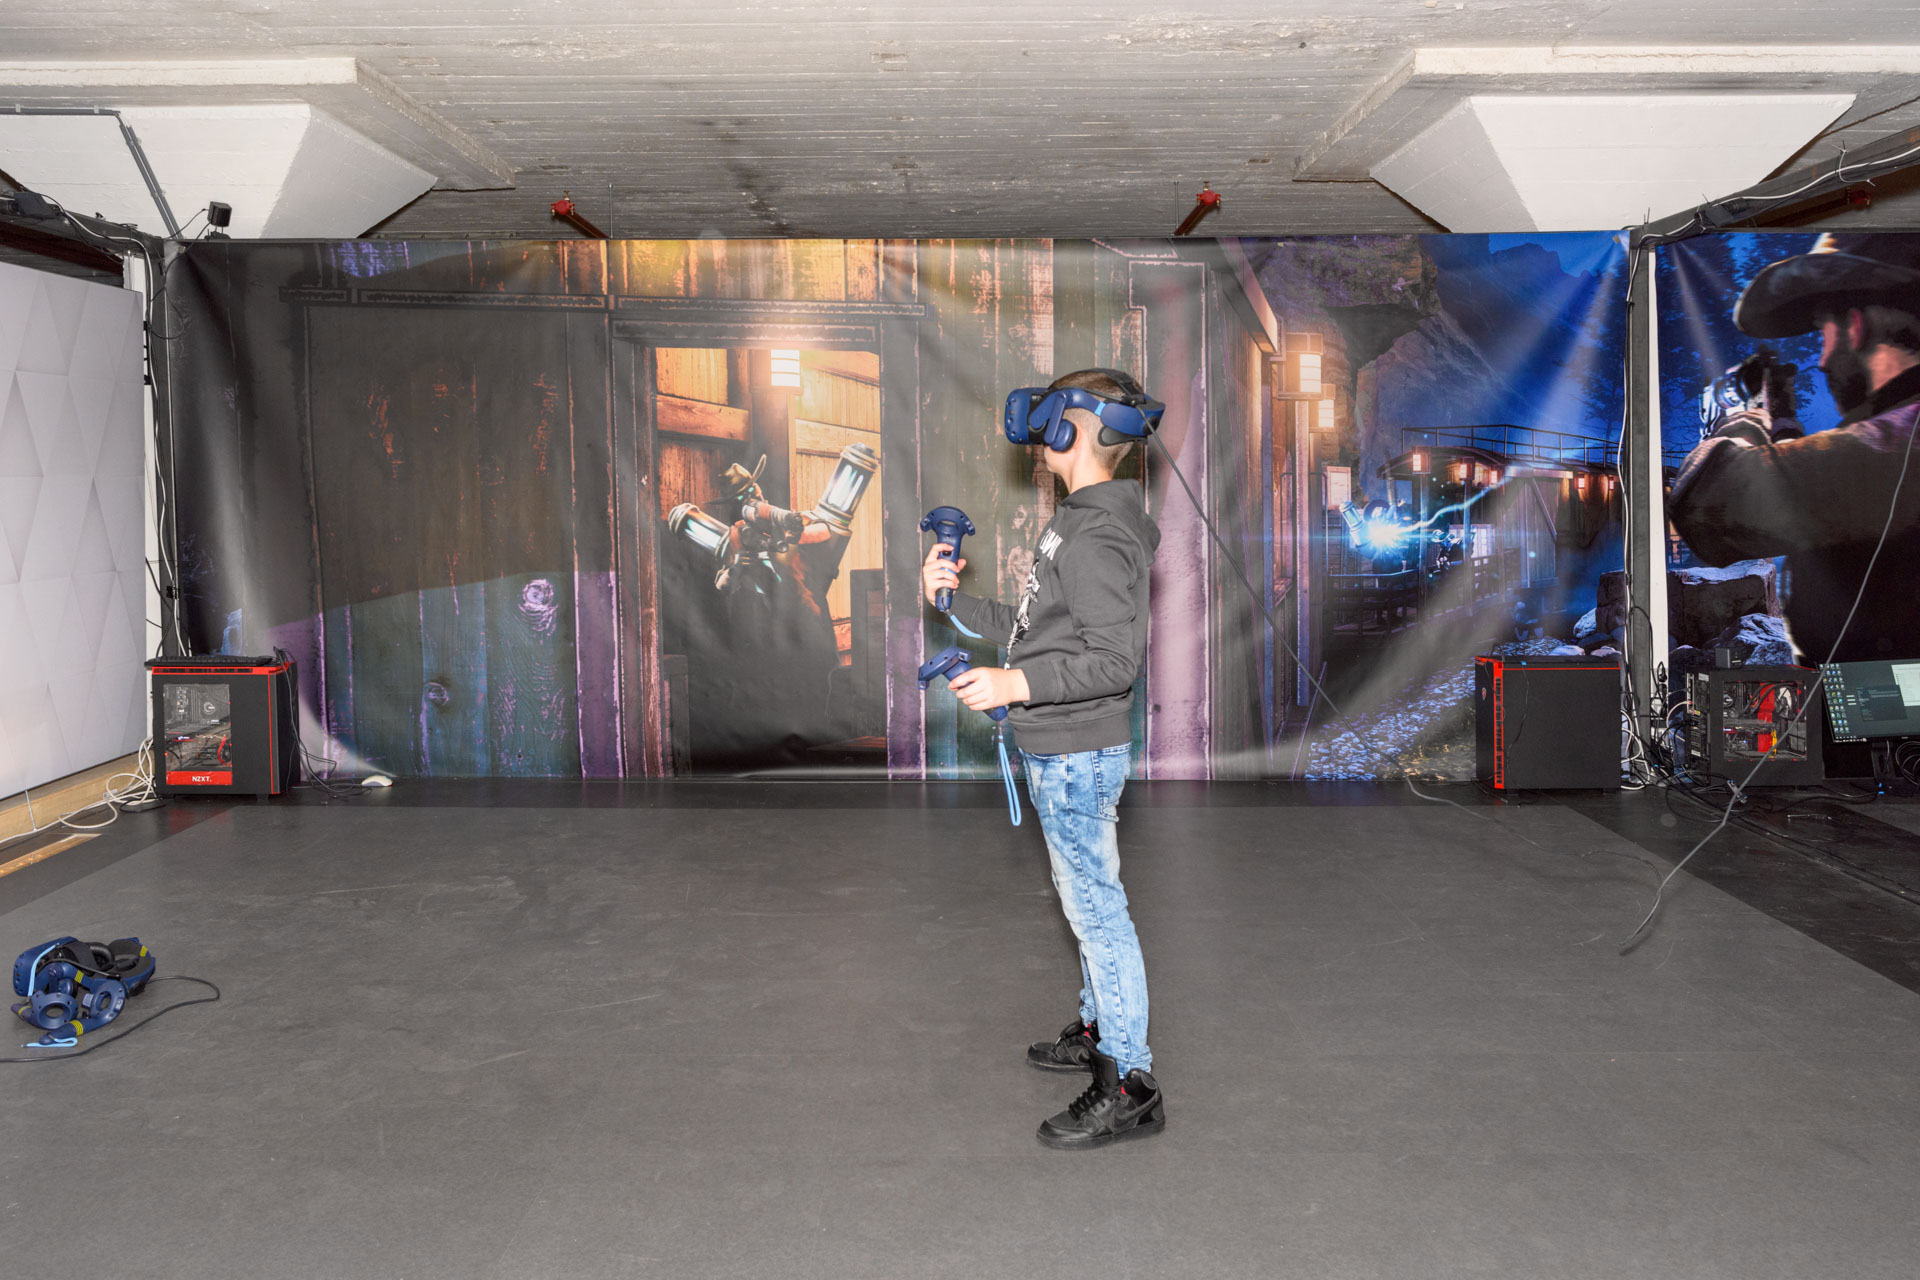 Face Reality | Enversed VR gaming - Dutch Design Week 2019 | Sas Schilten ★ Fotografie